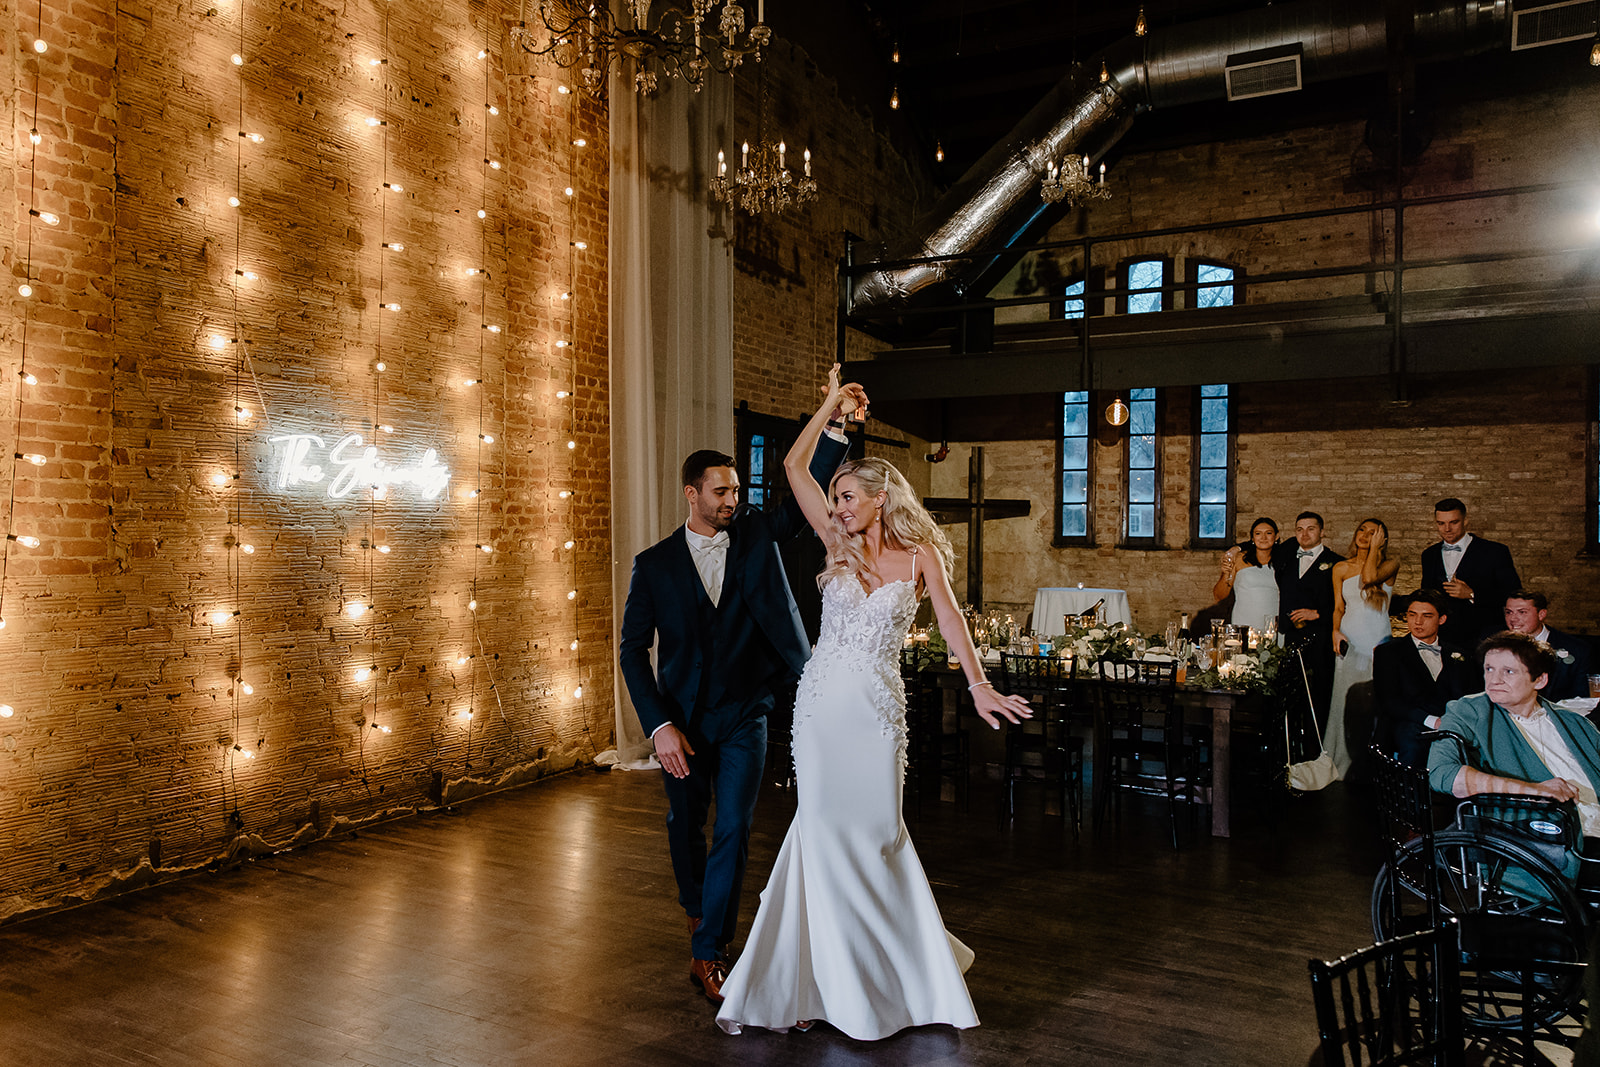 Groom twirls his bride on the dance floor at their wedding venue.